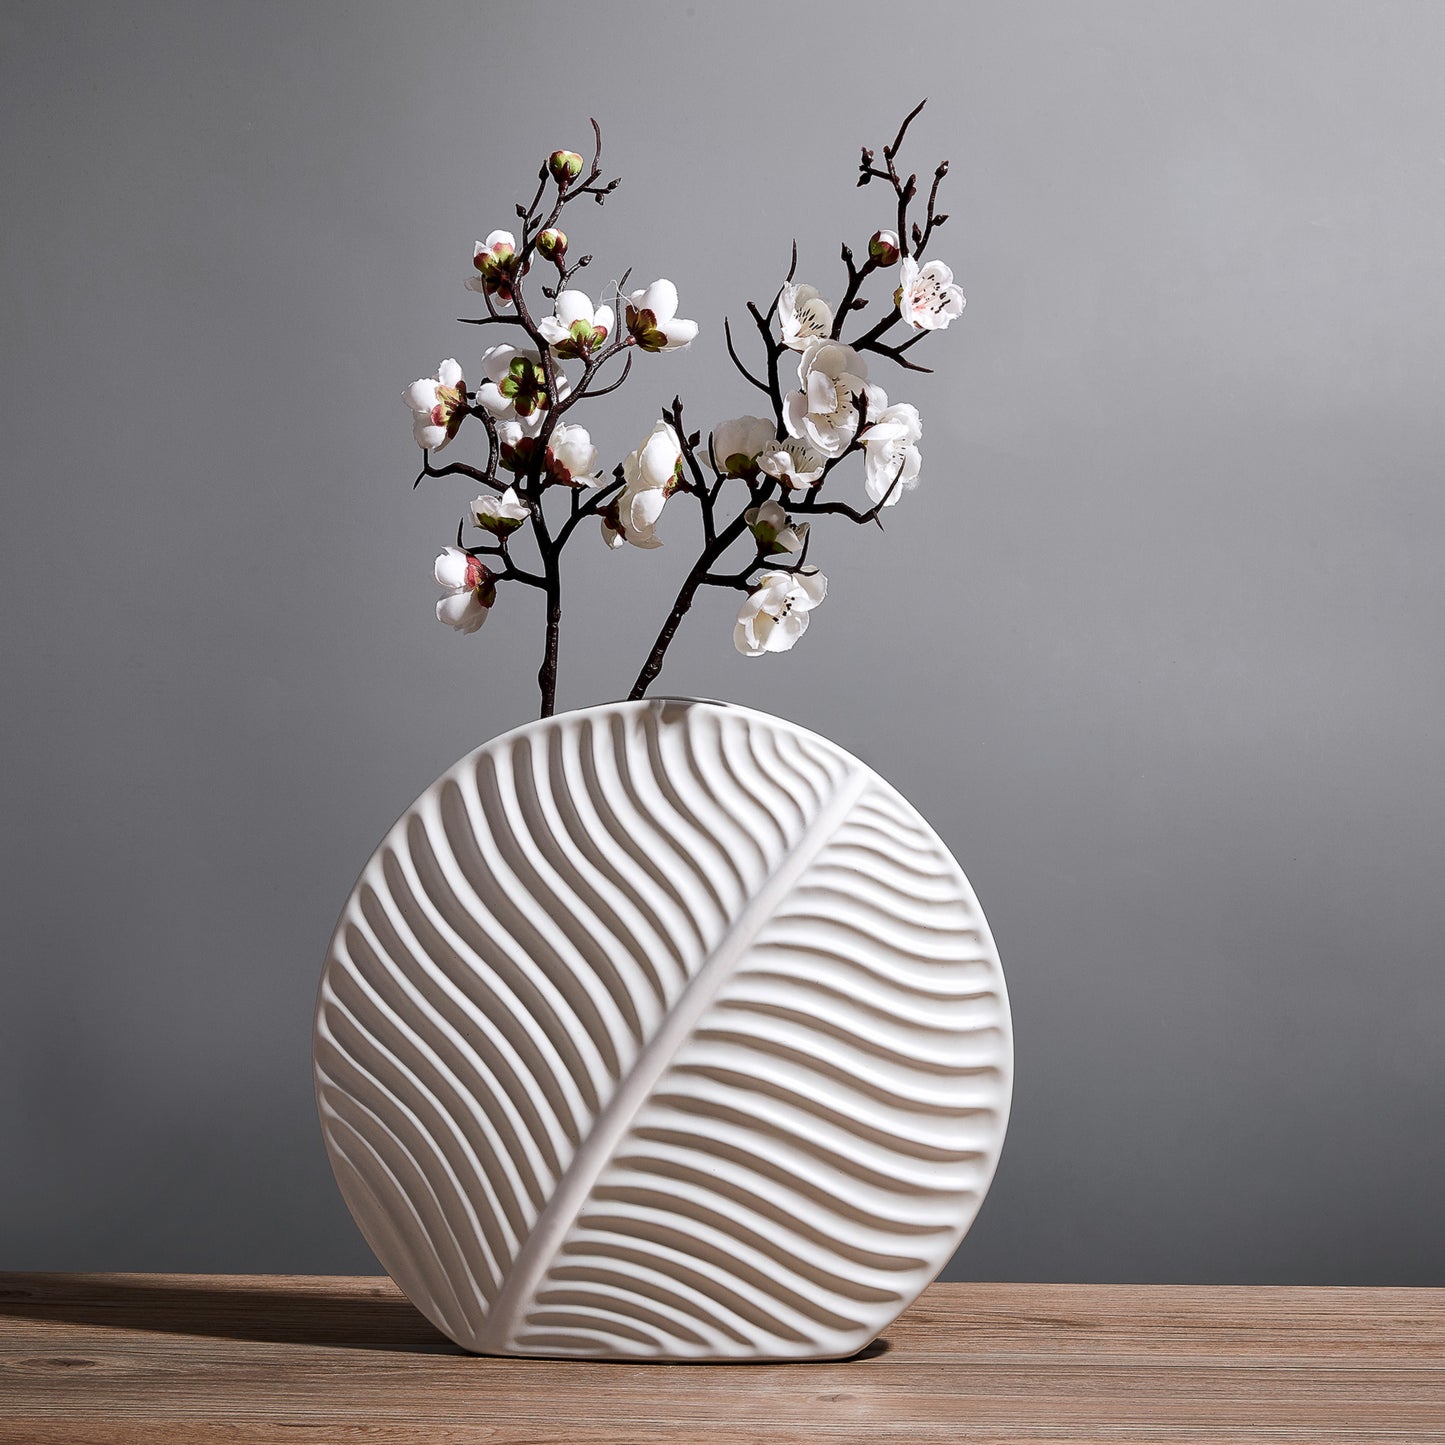 MIAJO White Ceramic Vase with Leaves Pattern Embossed